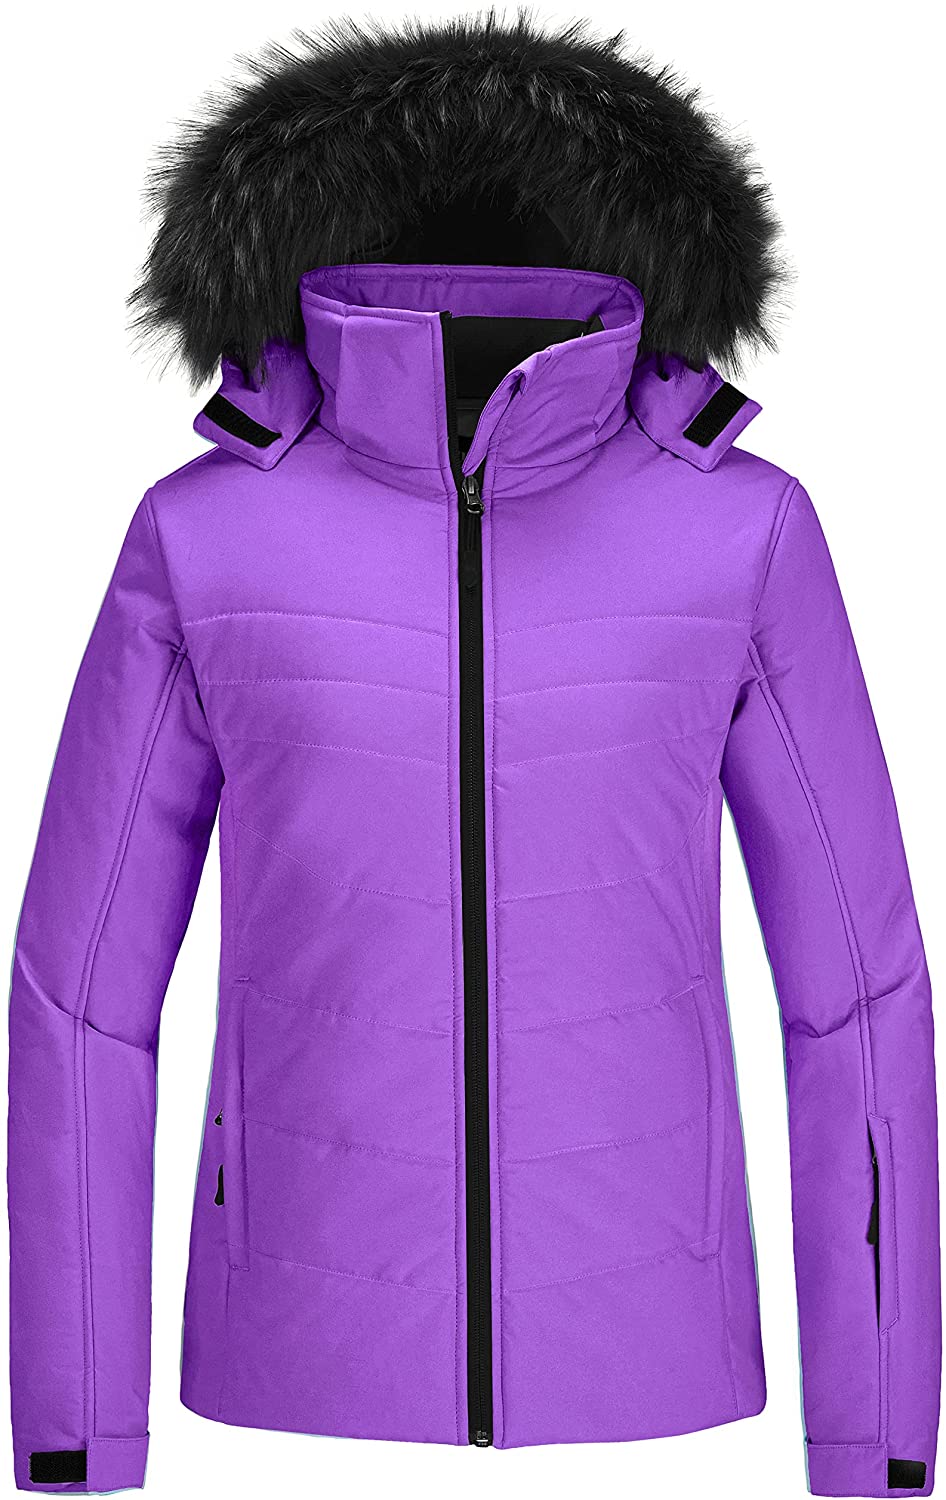 Skieer Women's Waterproof Ski Jacket Warm Puffer Jacket Thick Hooded Winter Coat 